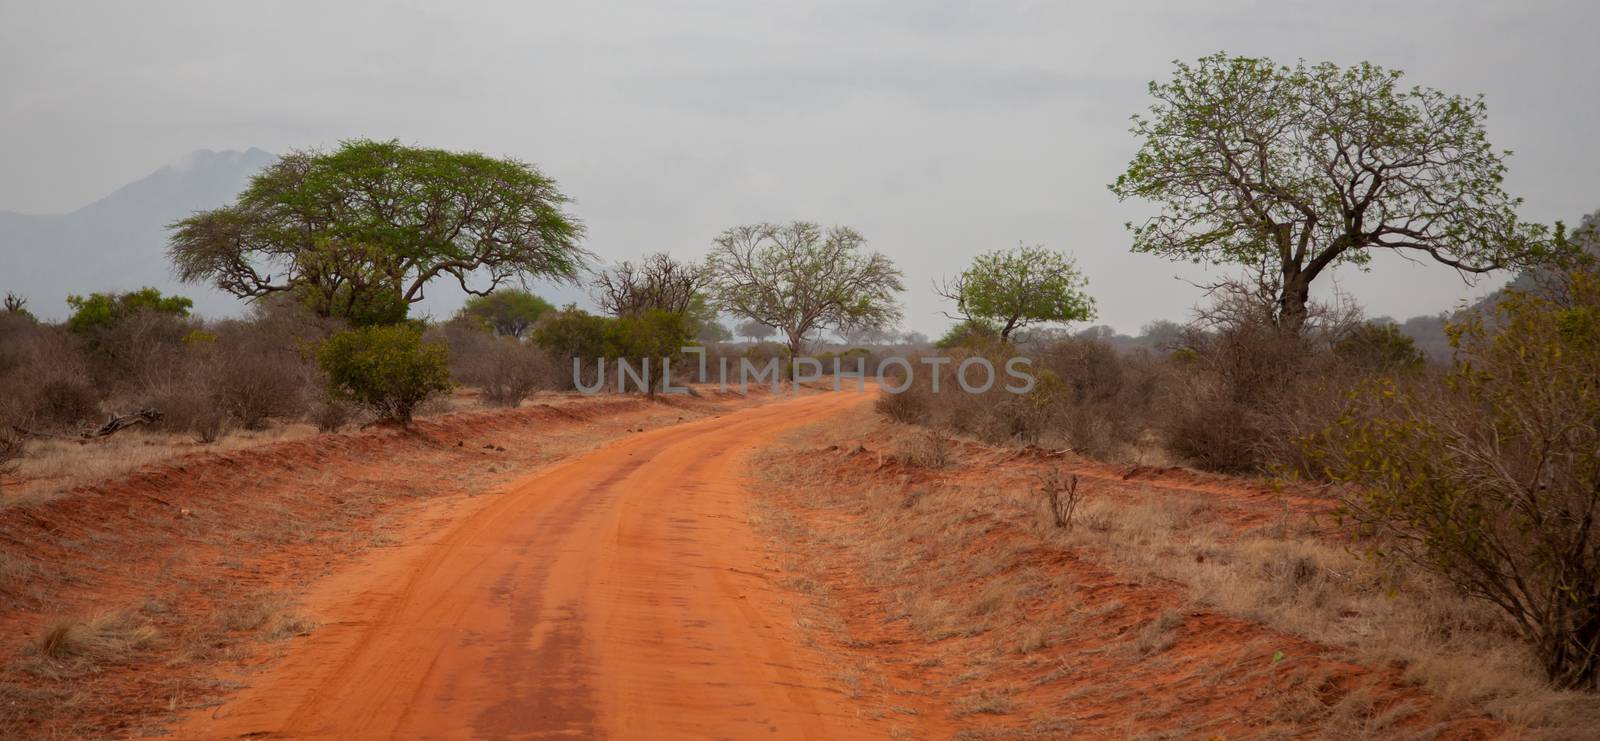 Landscape in Afrika, on safari in Kenya by 25ehaag6